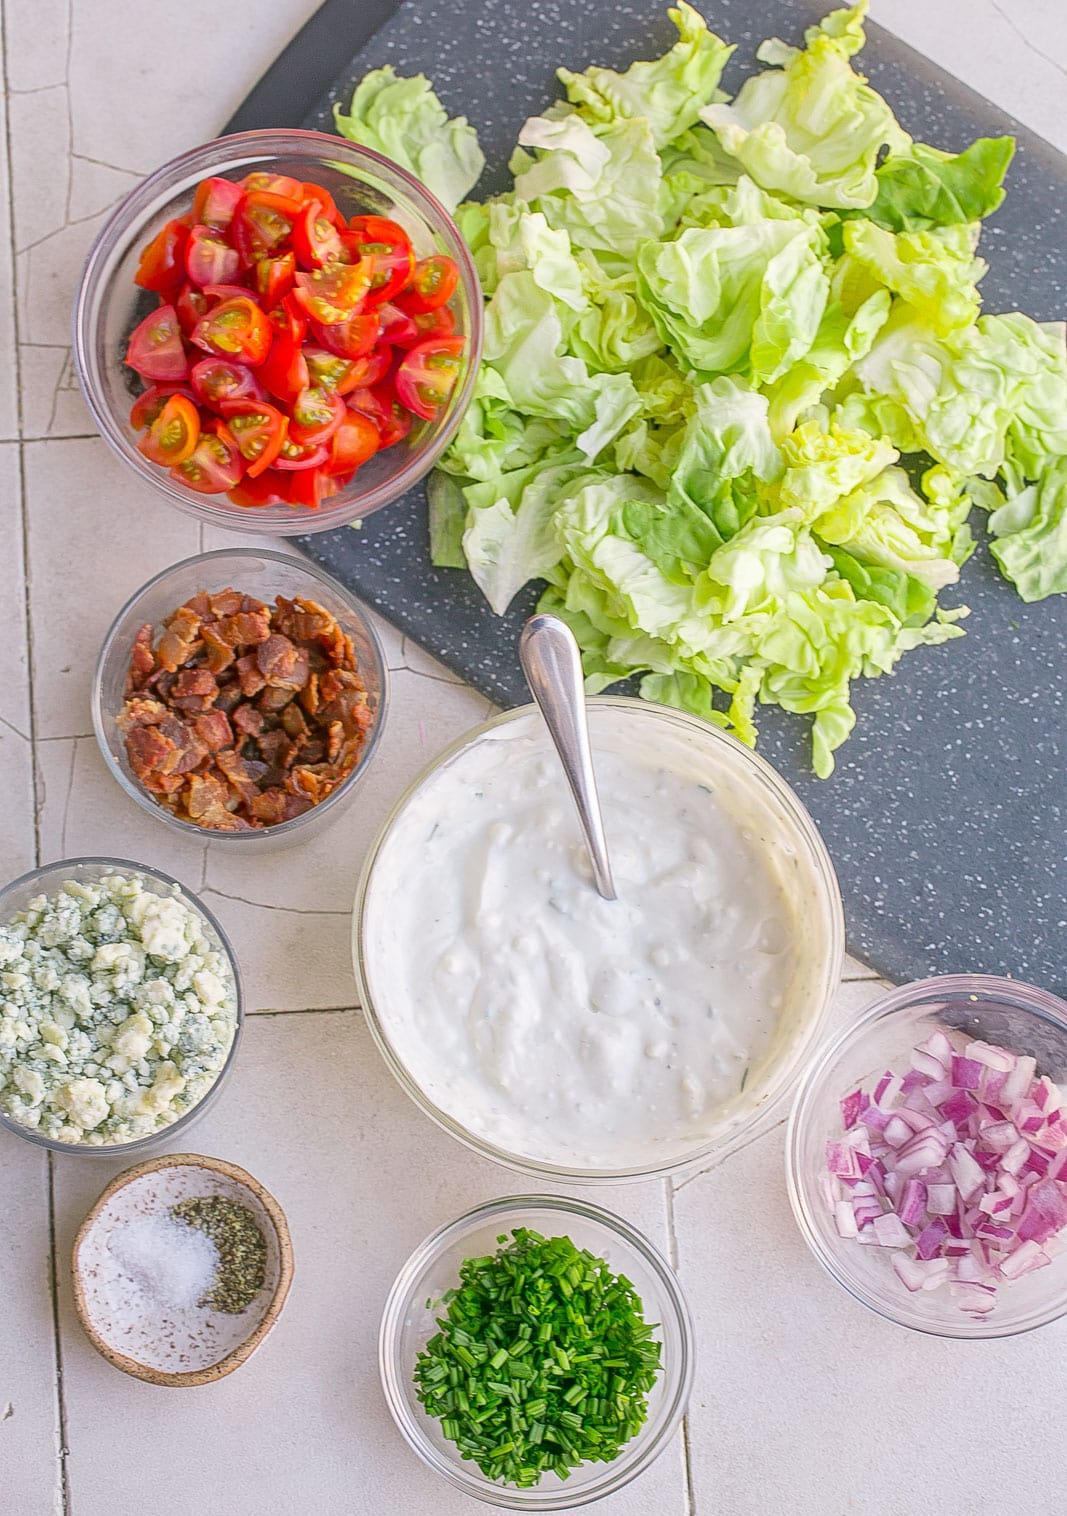 Ingredients for wedge salad.